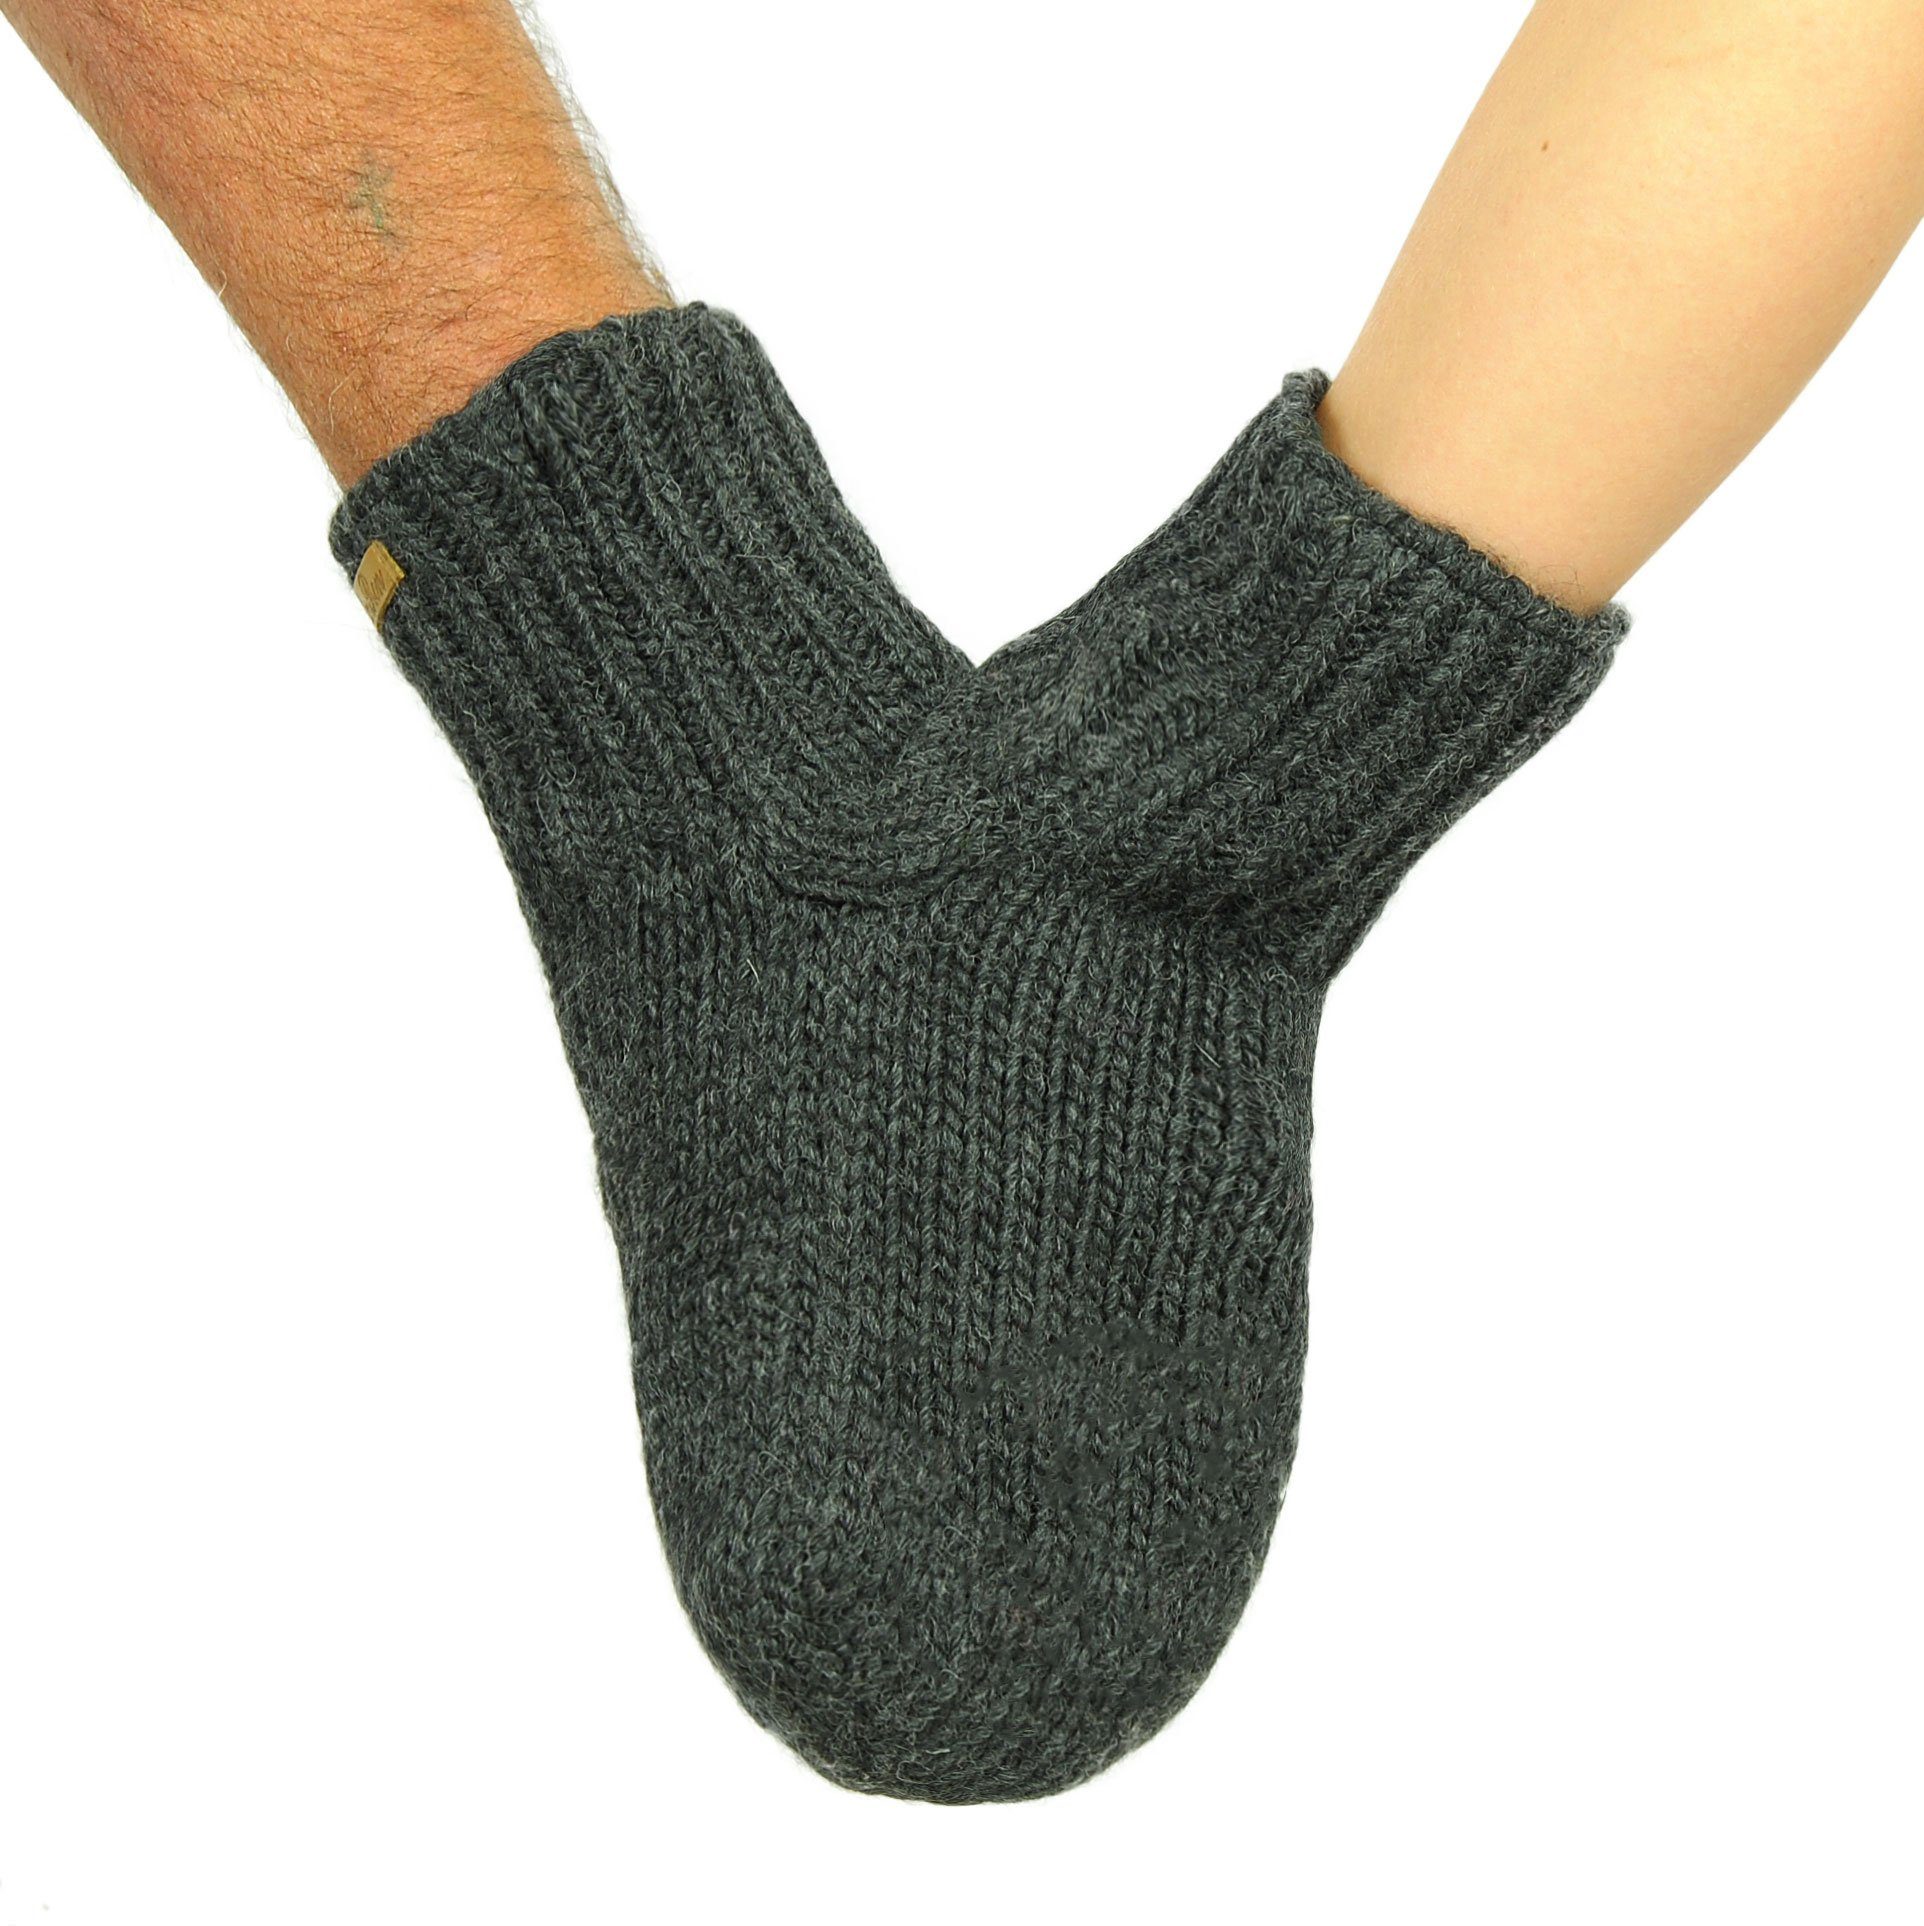 Handschuh Strickhandschuhe Pärchenhandschuh Modell mit gefüttert Händchenhalten, Ein Fleece Valentin zum komplett Naturbraun McRon